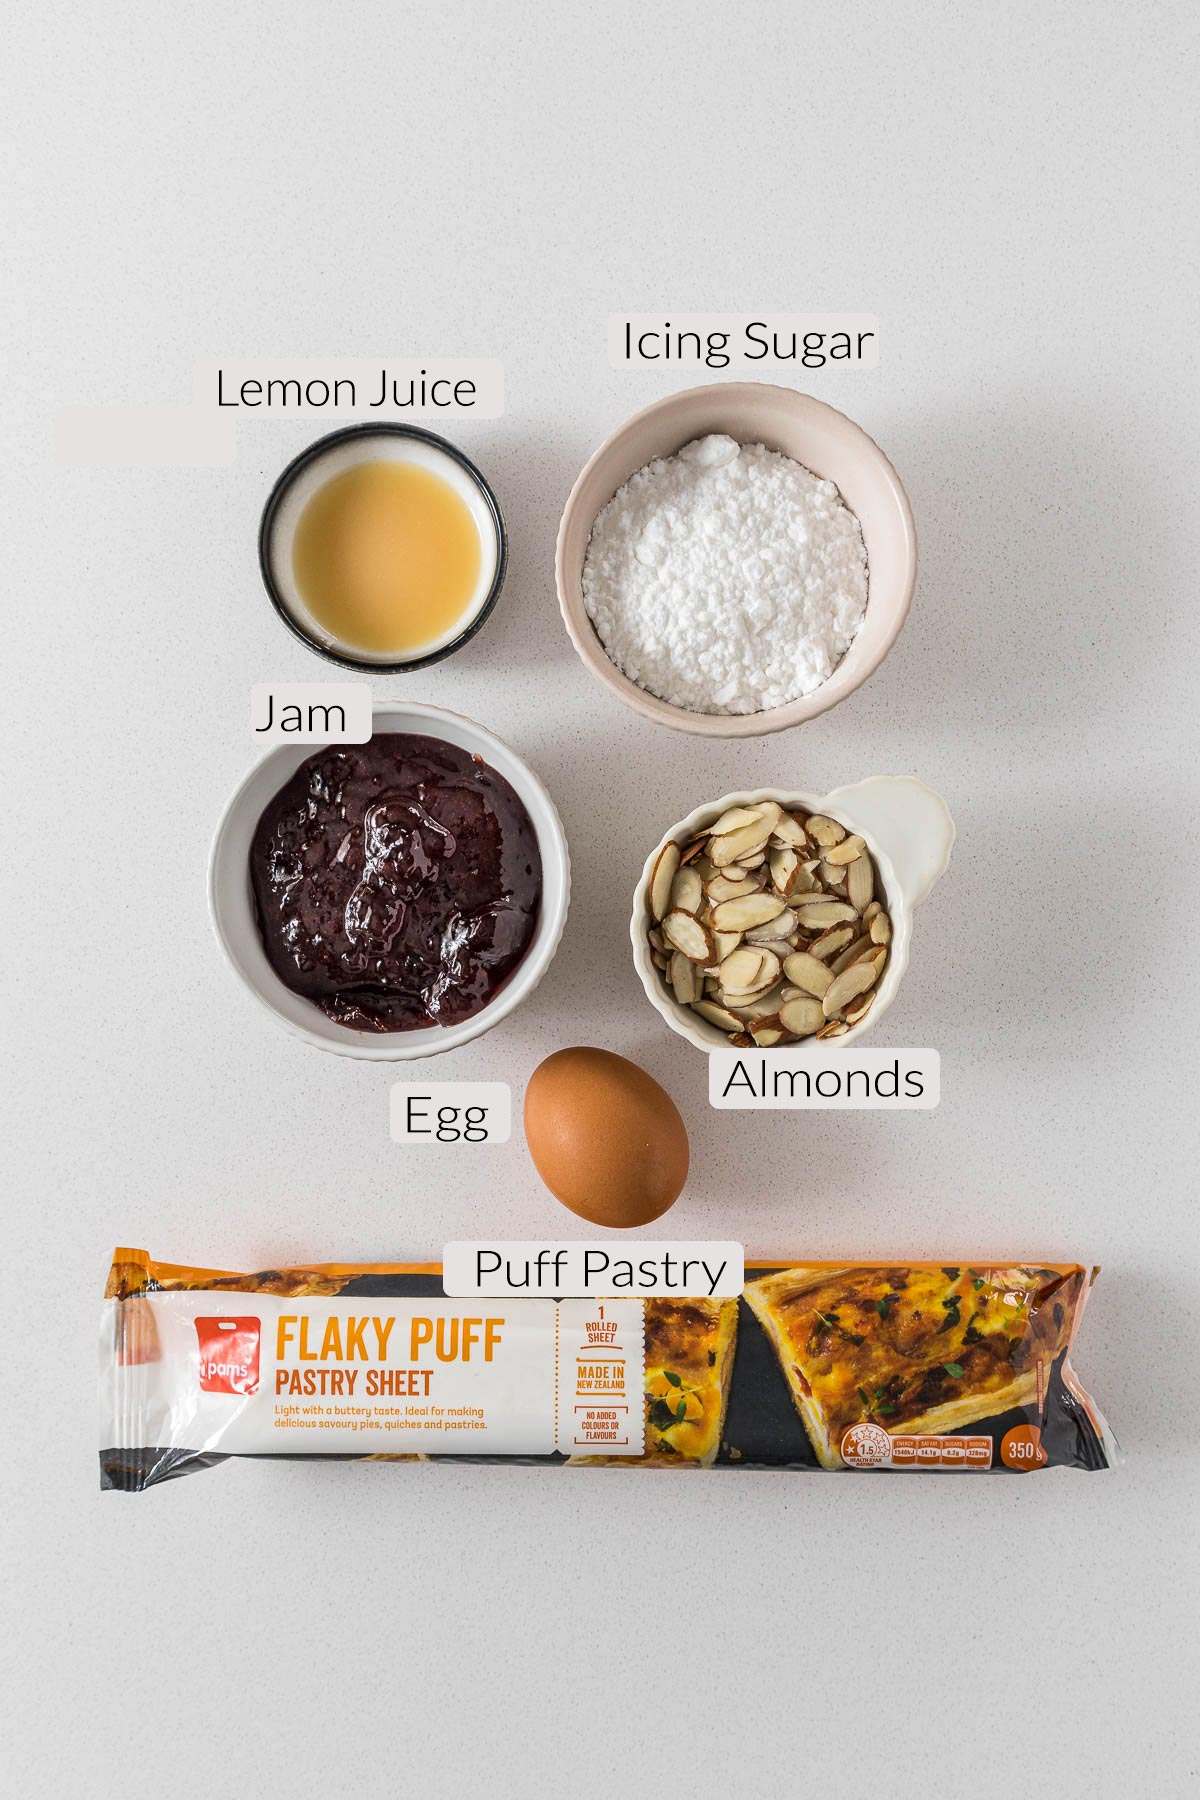 Jam puff pastry ingredients - lemon juice, icing sugar, jam, sliced almonds, egg, puff pastry.